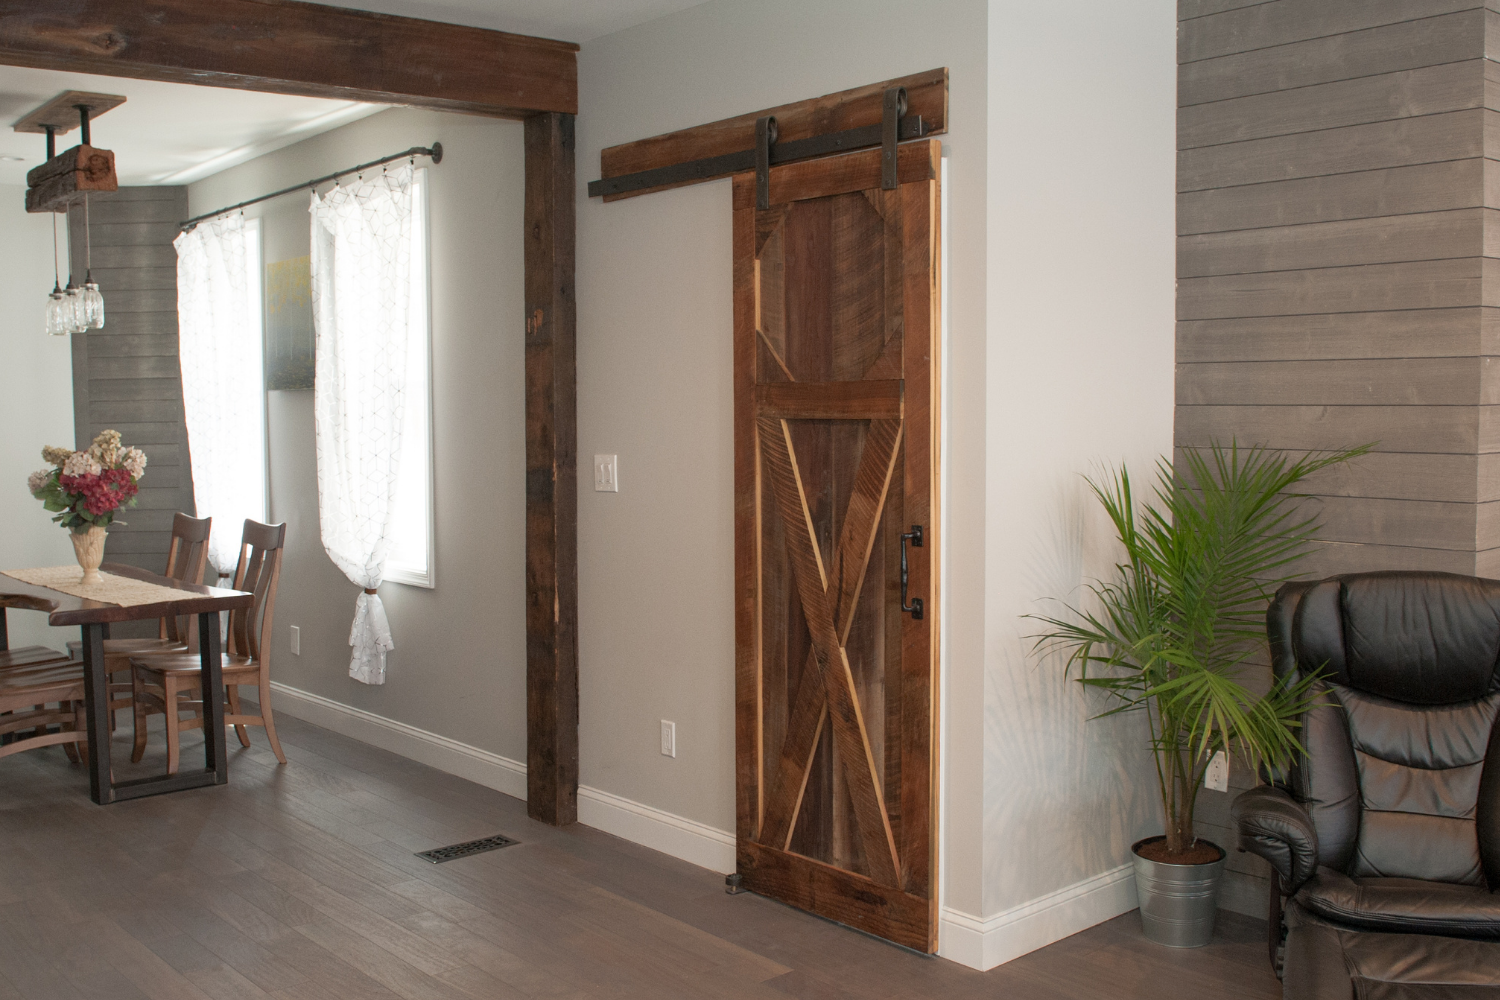 Rustic Barn Door Ideas for Your Home